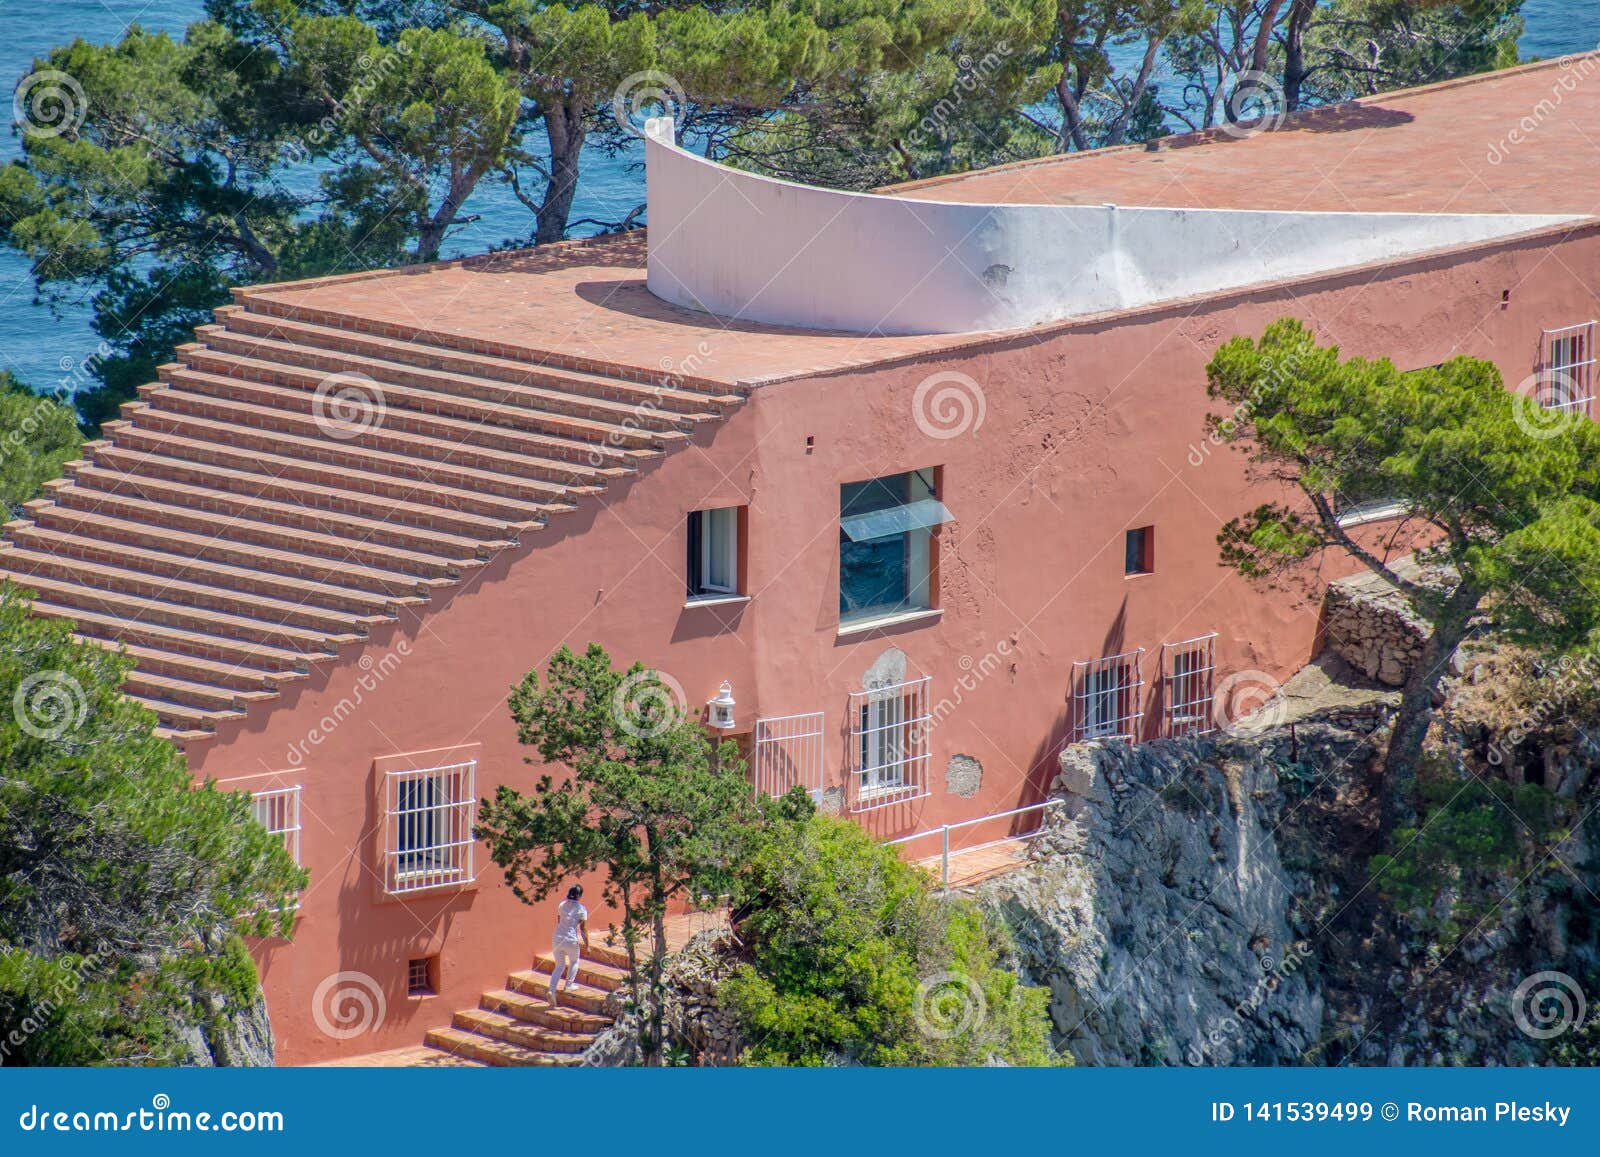 The Famous Villa Malaparte On The Island Of Capri Italy Editorial Stock Image Image Of Movie City